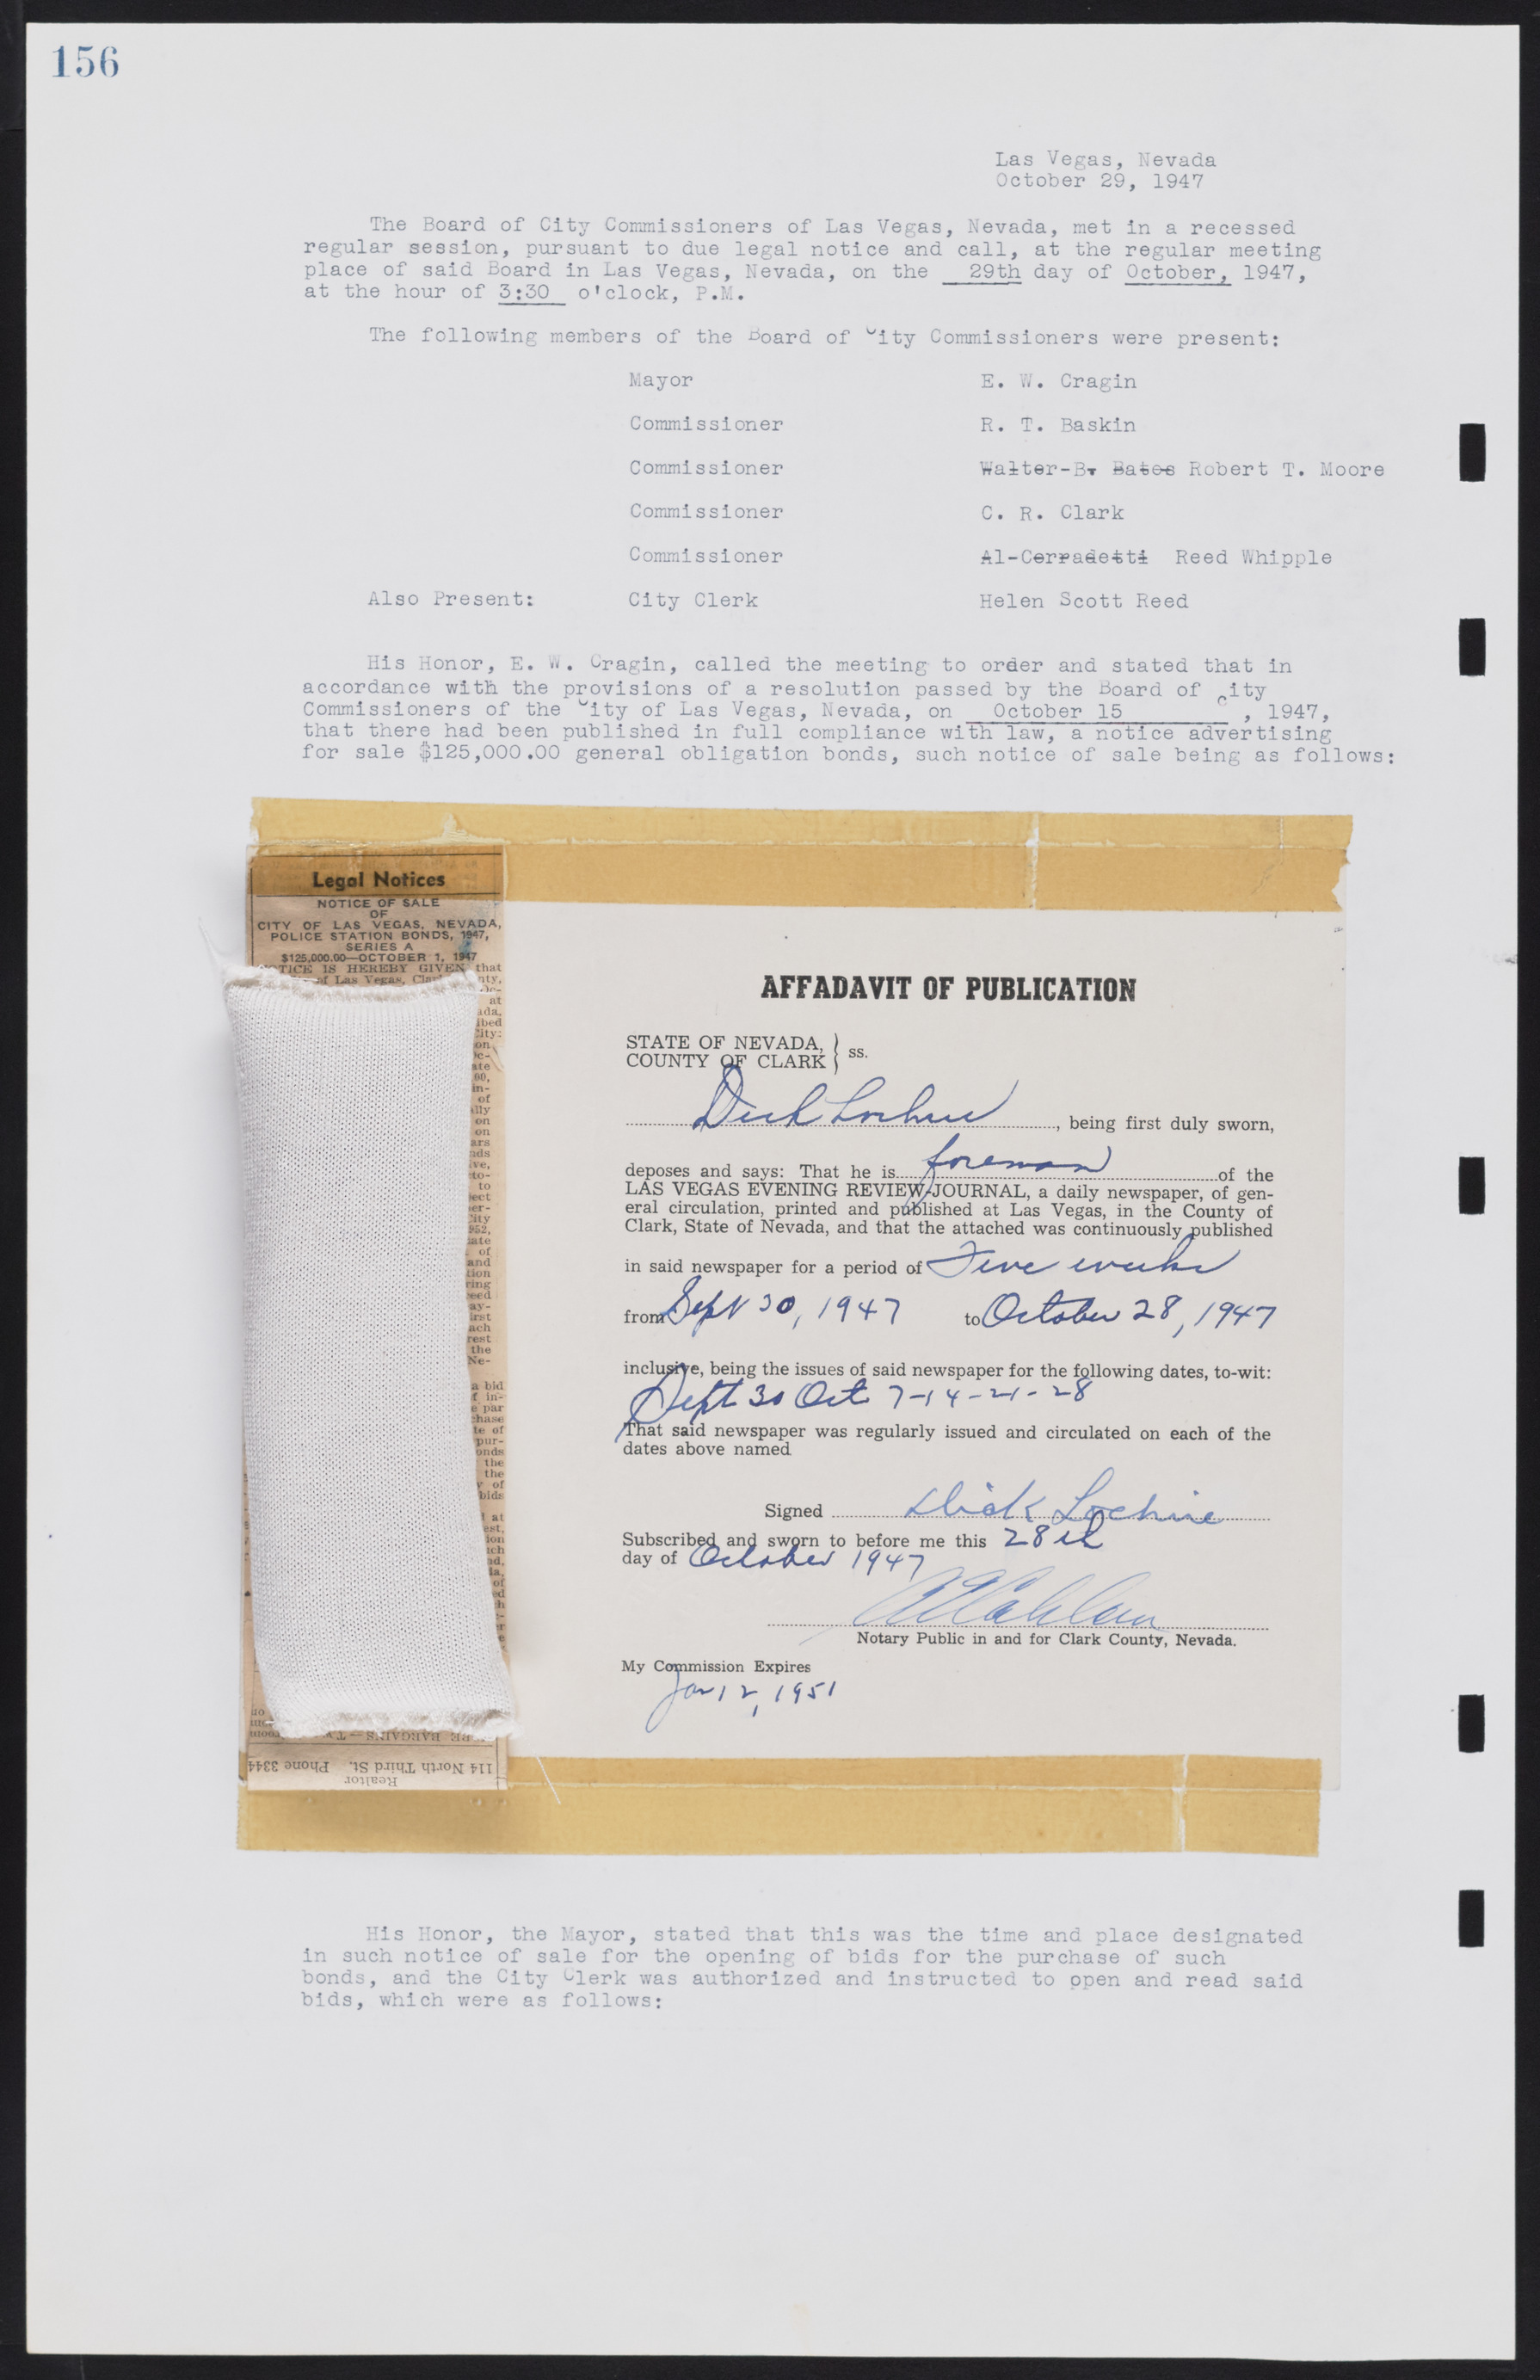 Las Vegas City Commission Minutes, January 7, 1947 to October 26, 1949, lvc000006-176